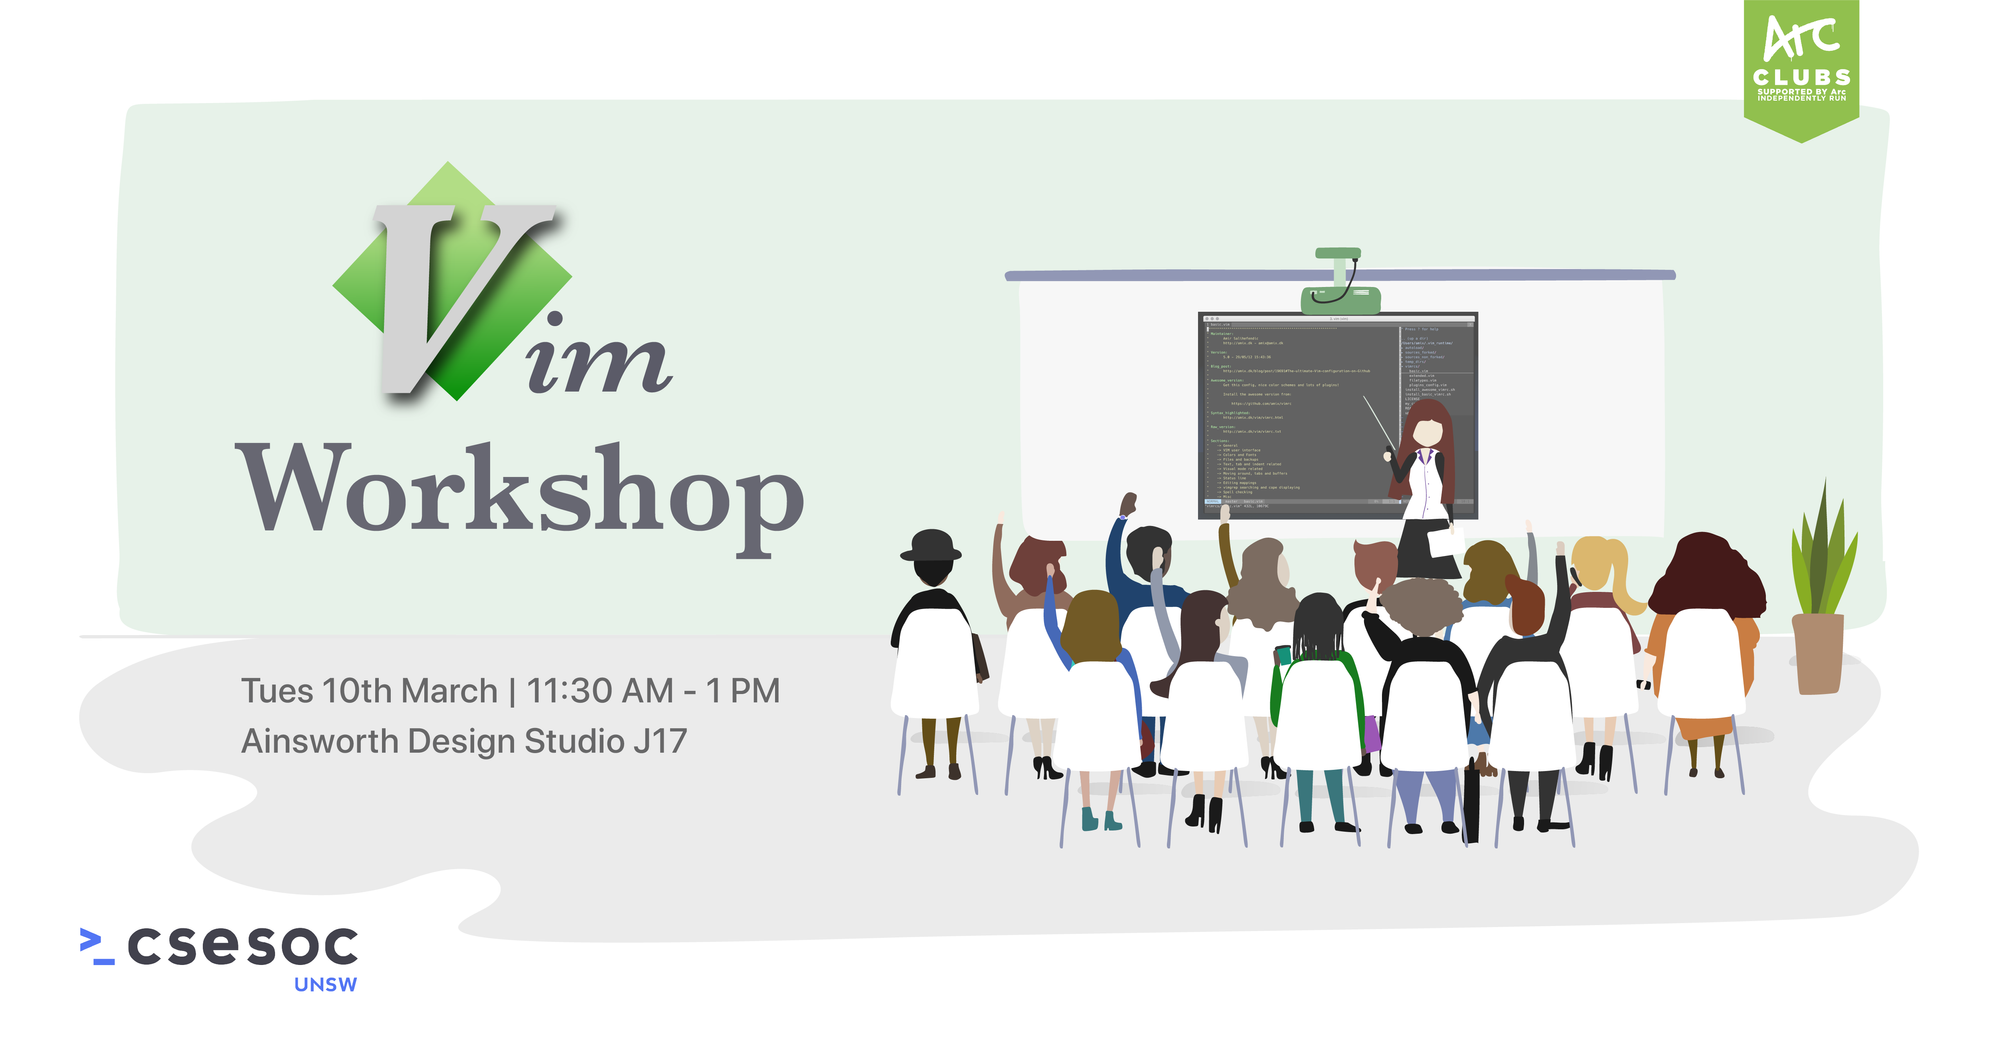 Vim Workshop: An Introduction to Vim